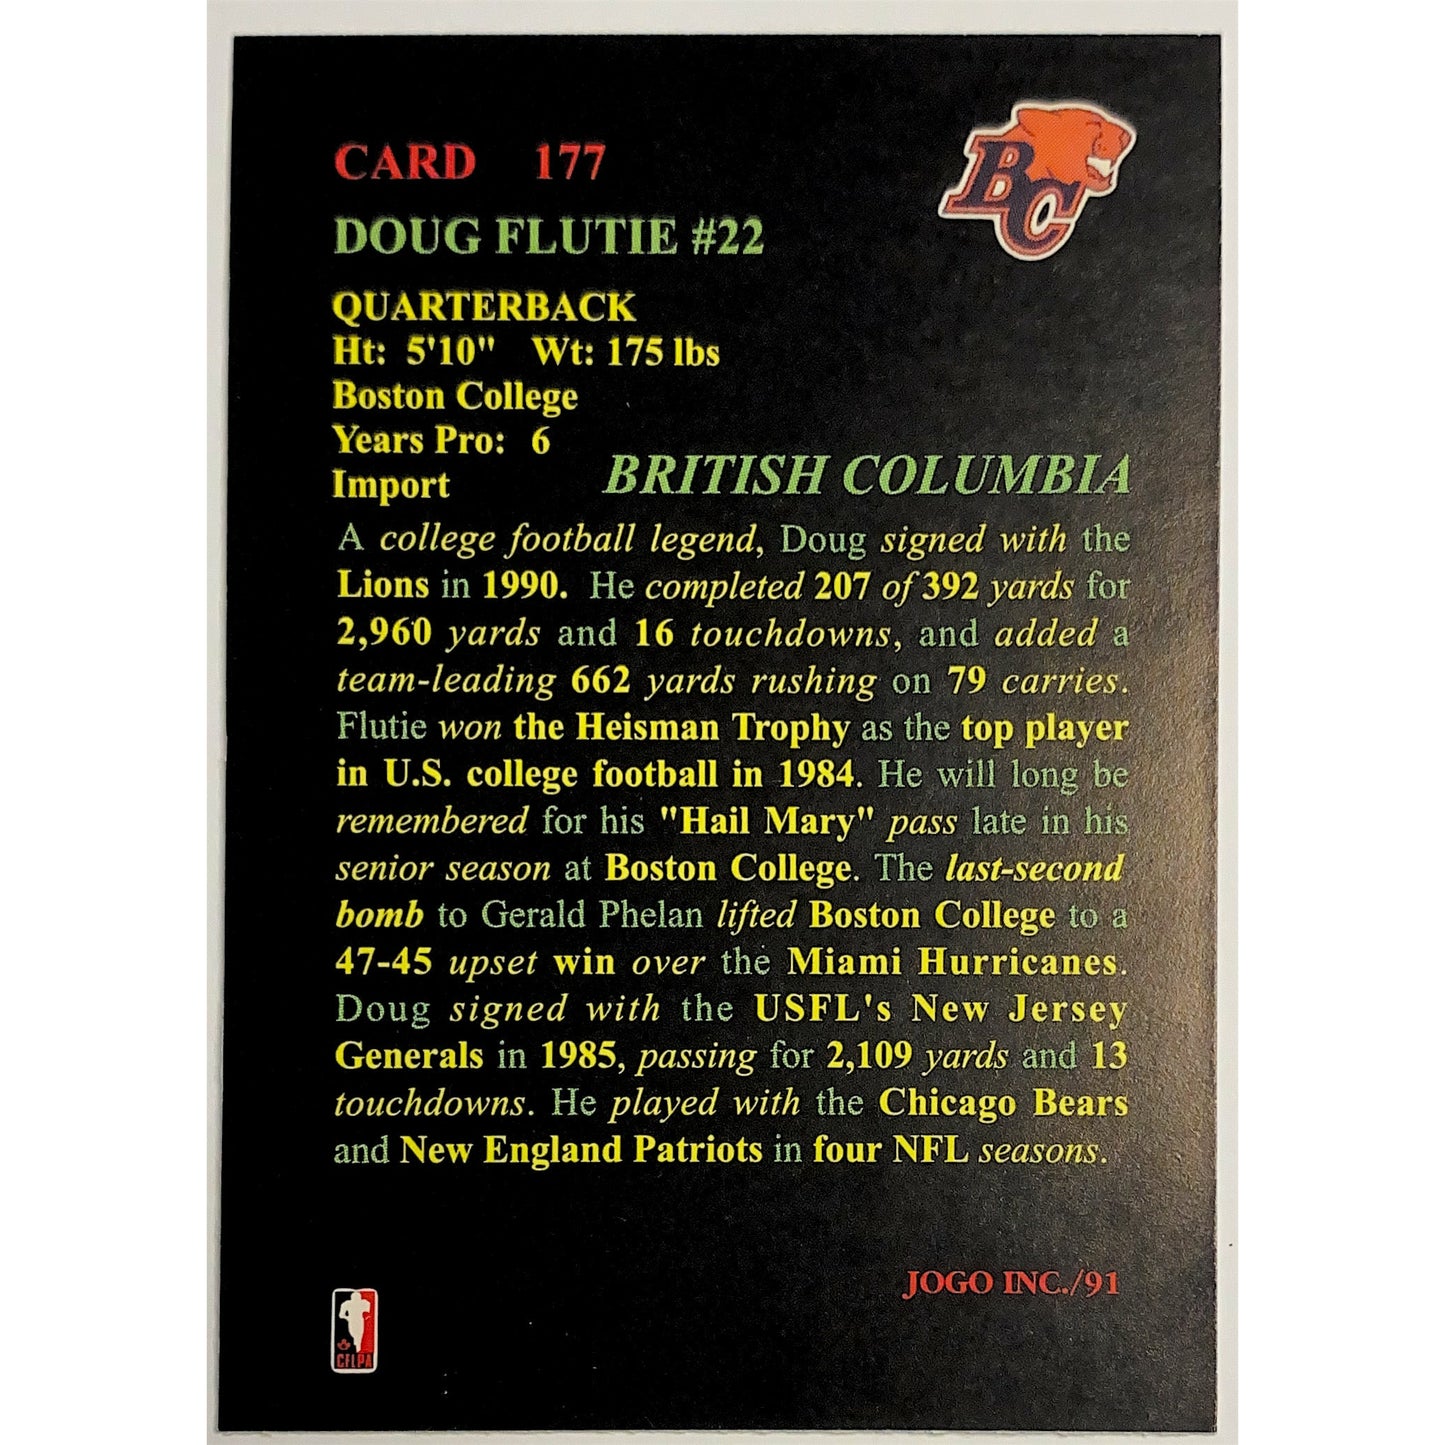 1991 JOGO CFL Doug Flutie Rookie Card #177